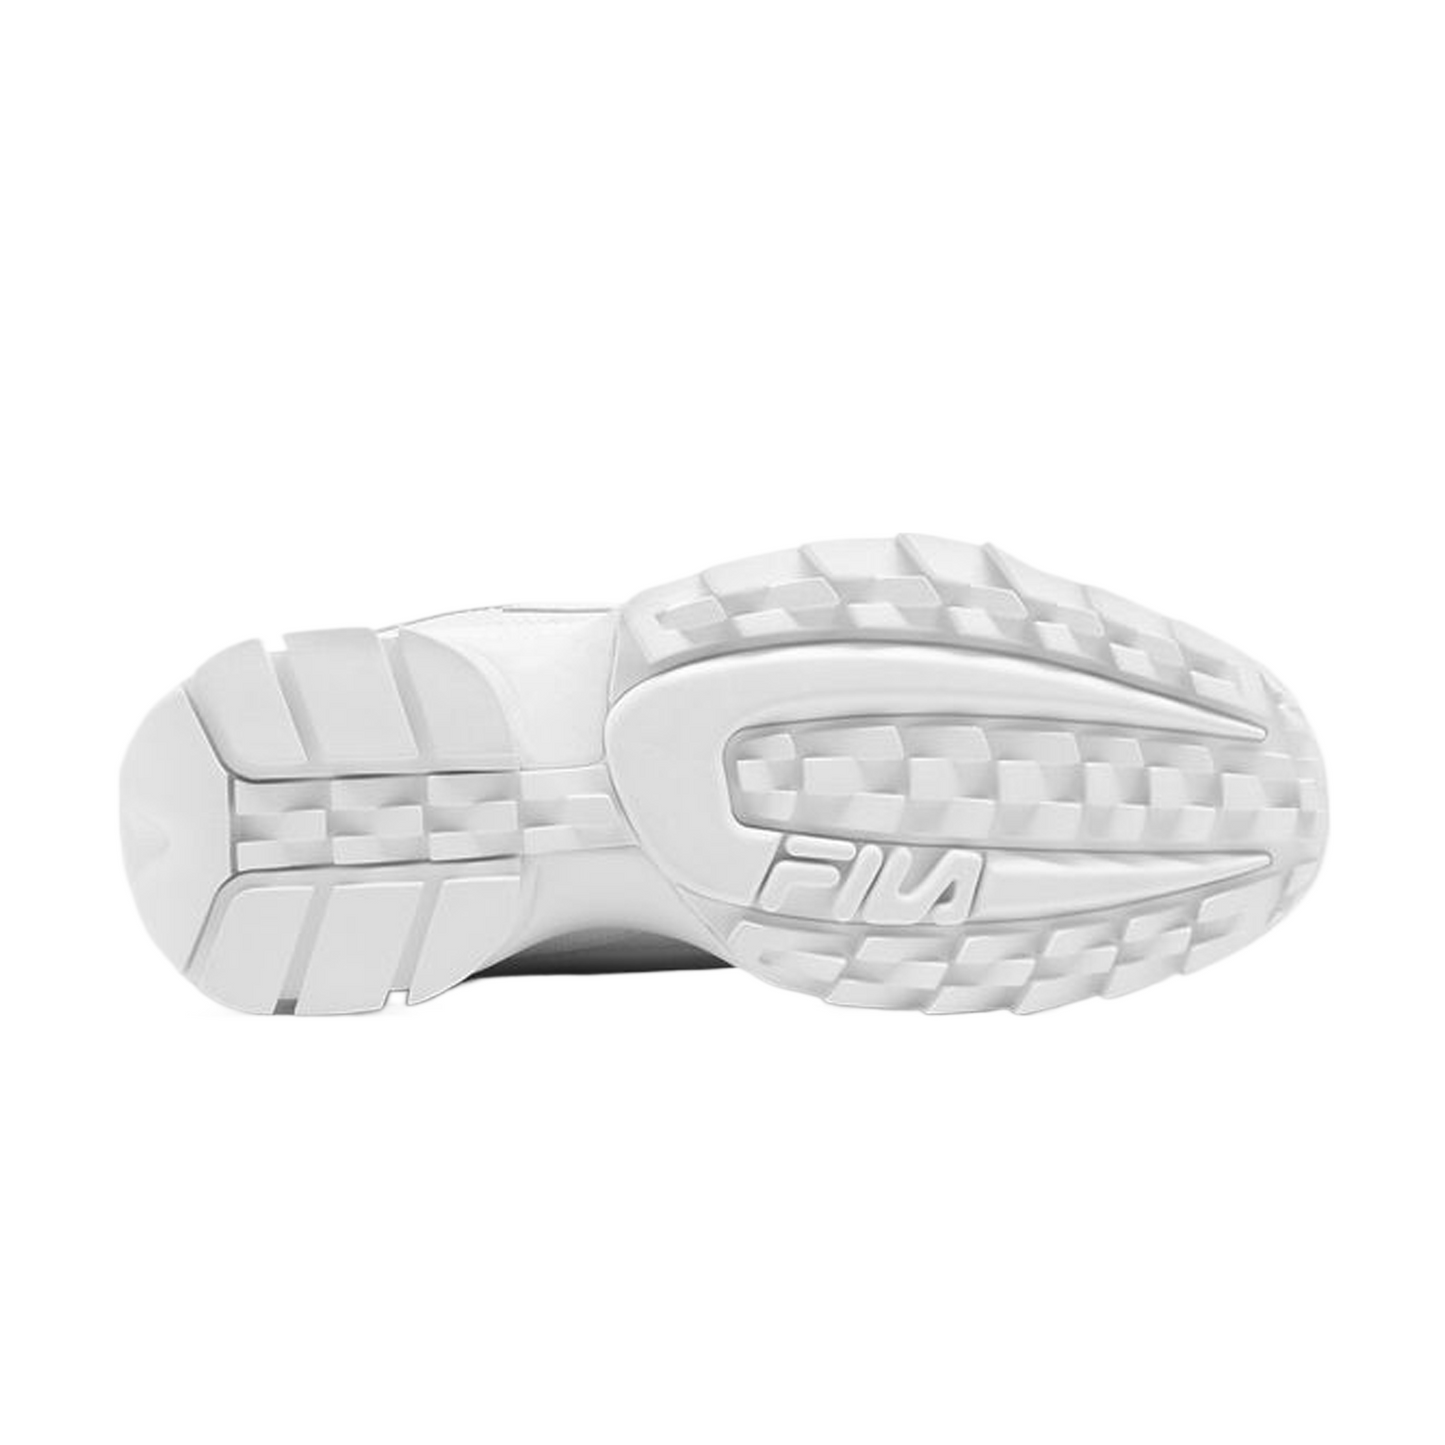 Fila Men's Disruptor II Premium Shoes White/Navy/Red 1FM00139-125